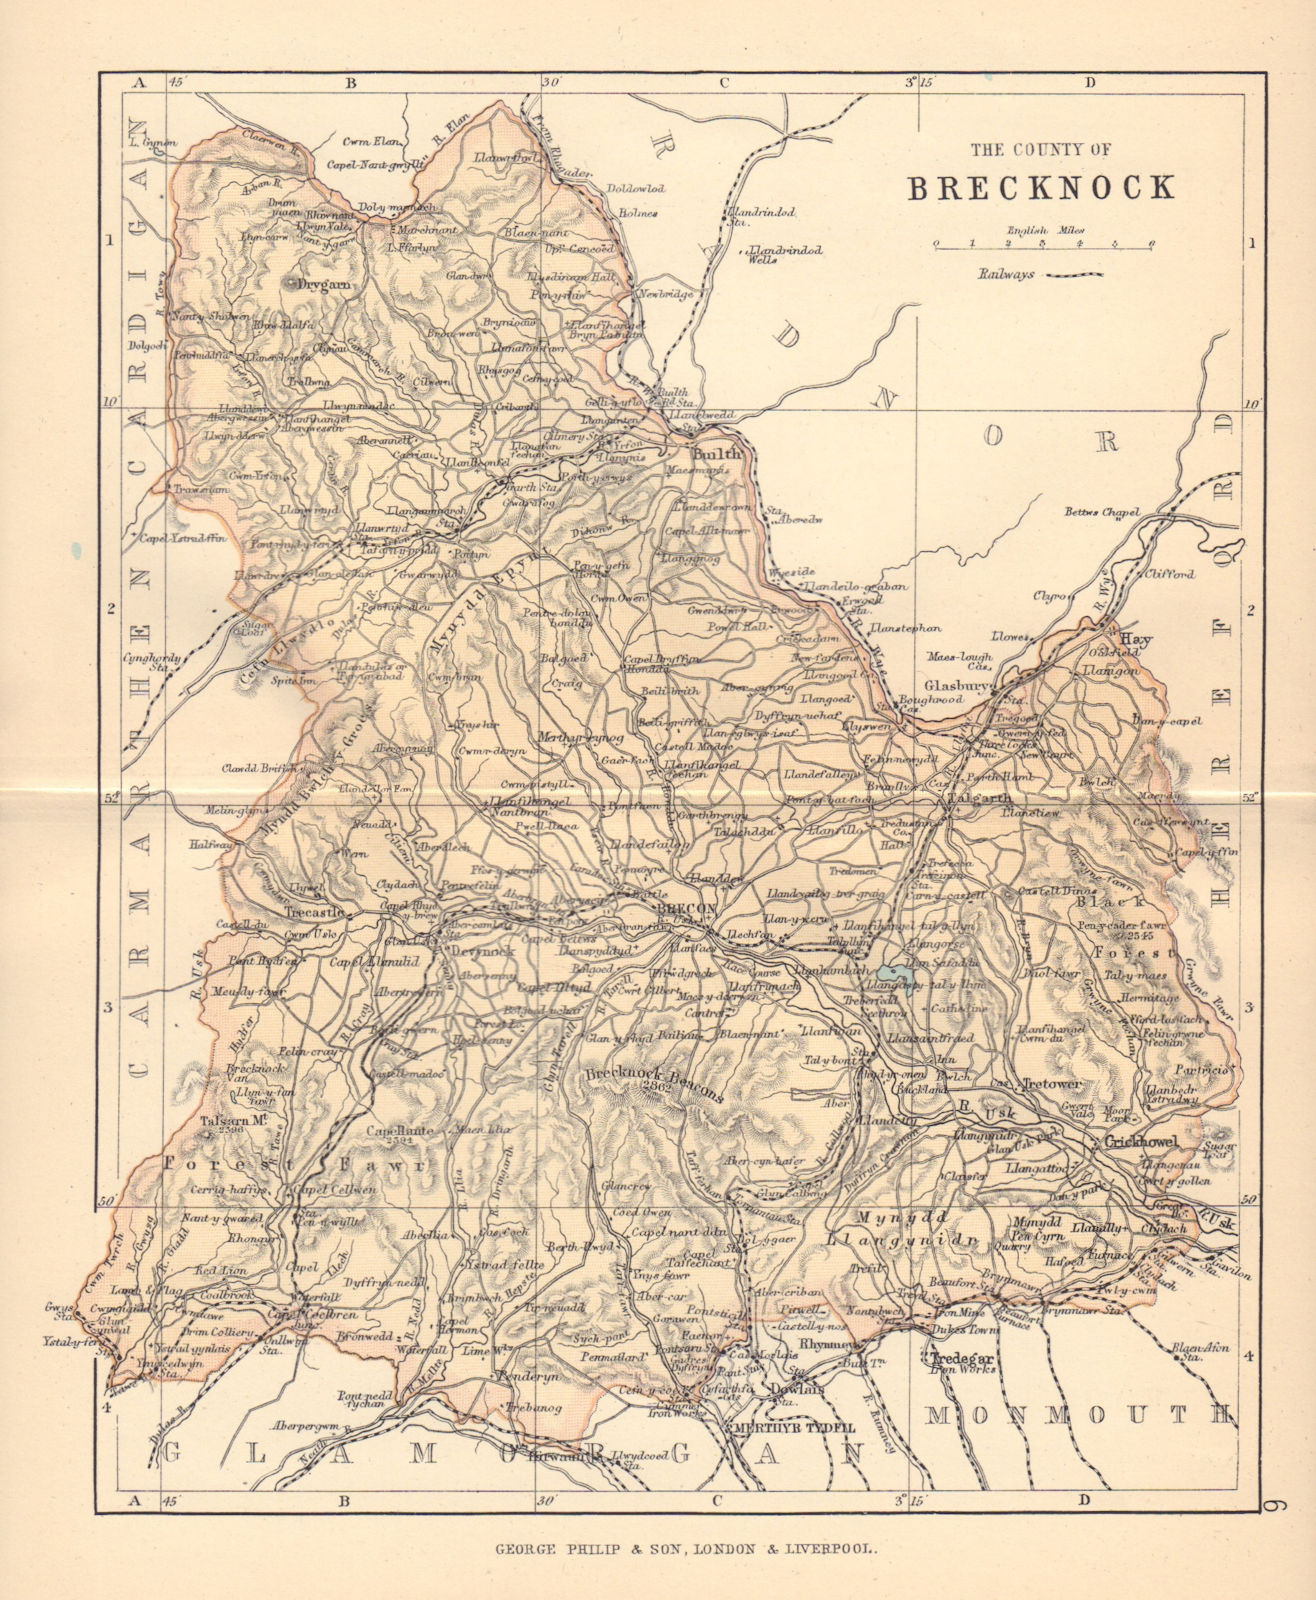 BRECKNOCKSHIRE "County of Brecknock" Brecon Beacons Wales BARTHOLOMEW 1885 map